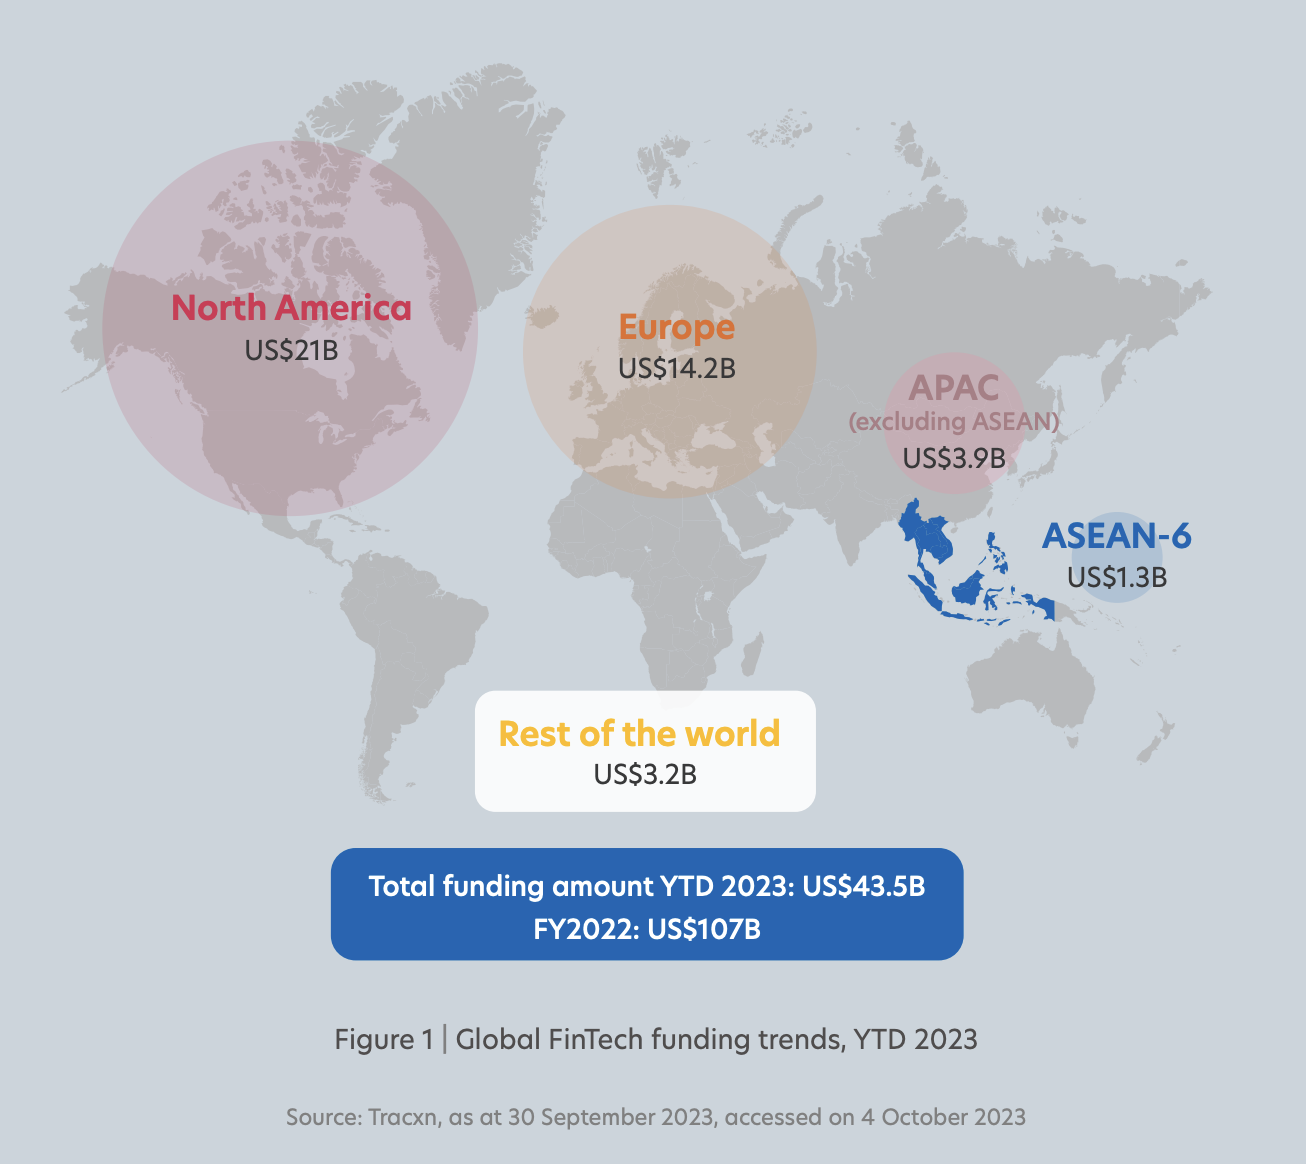 Global finrech funding trends, YTD 2023, Source: Fintech in ASEAN 2023: Seeding the Green Transition, UOB, PwC Singapore and the Singapore Fintech Association (SFA), Nov 2023